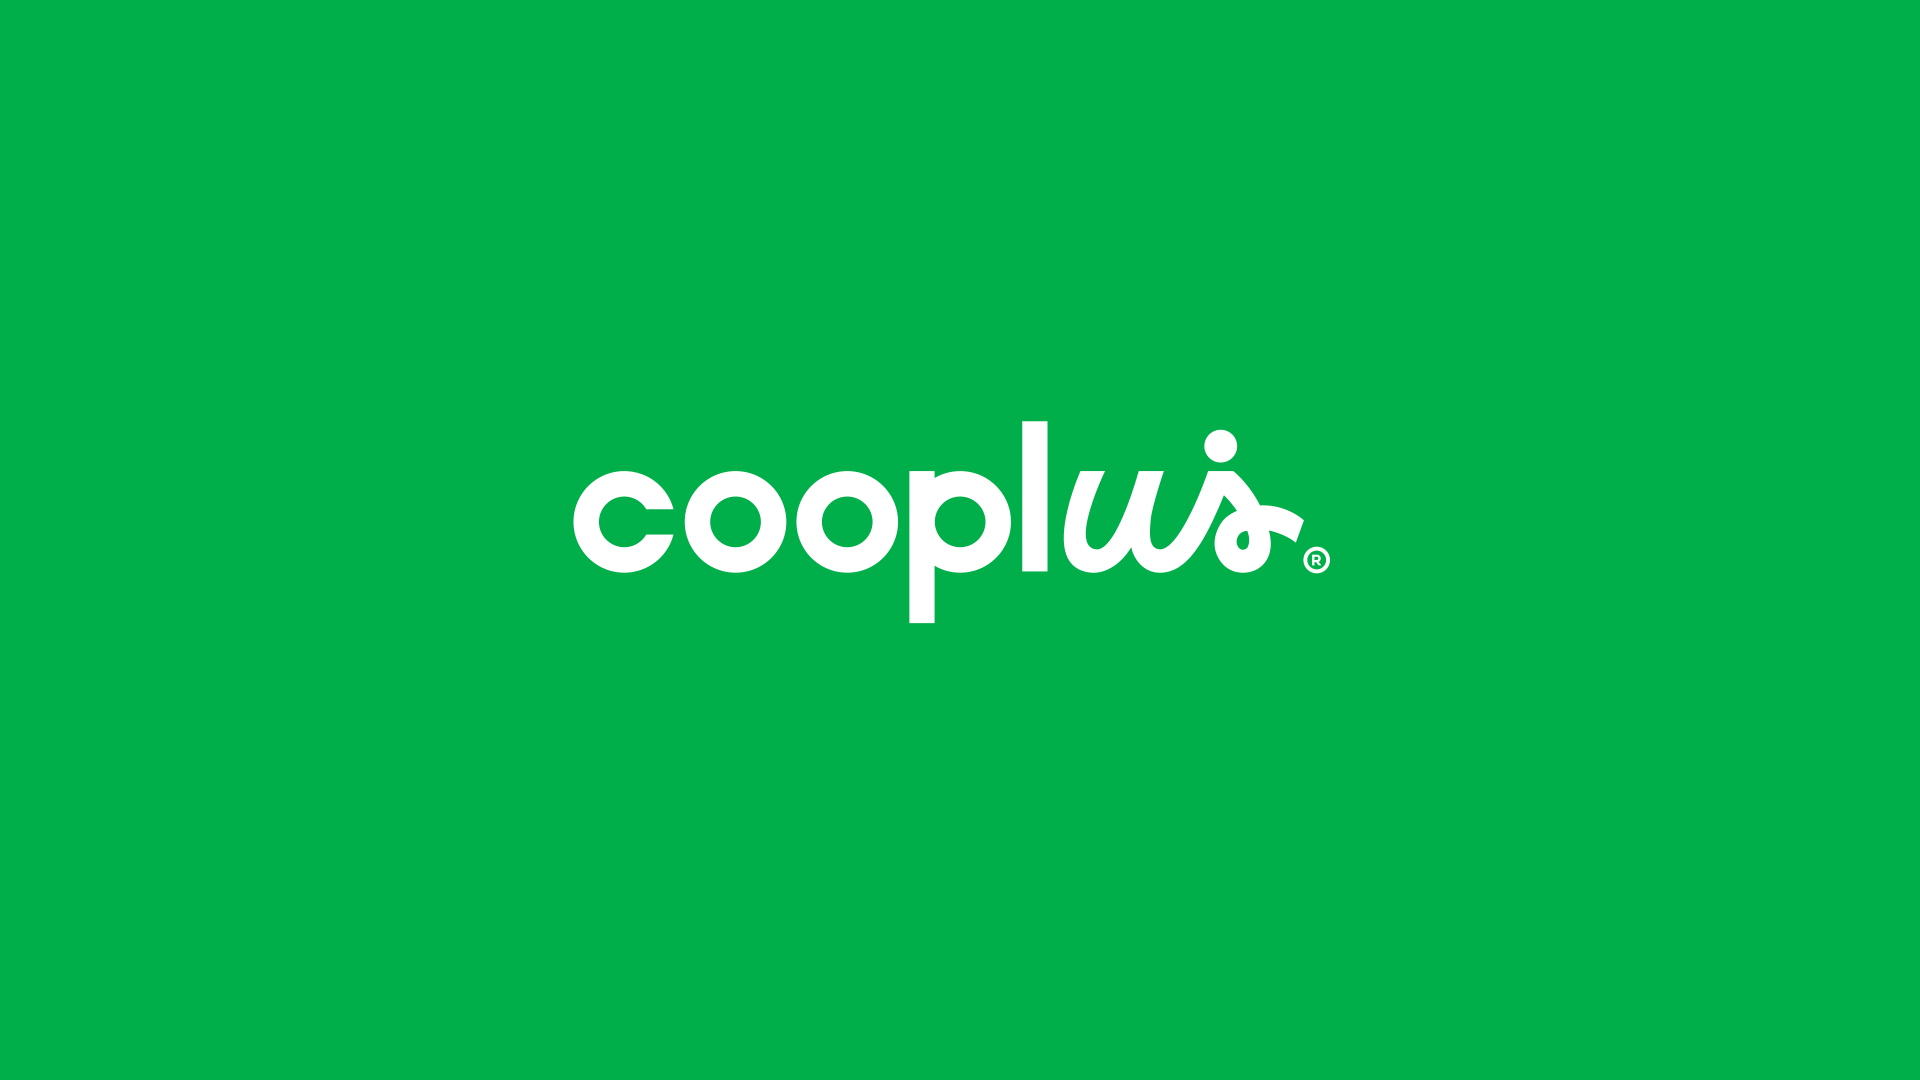 Cooplus农业品牌形象设计